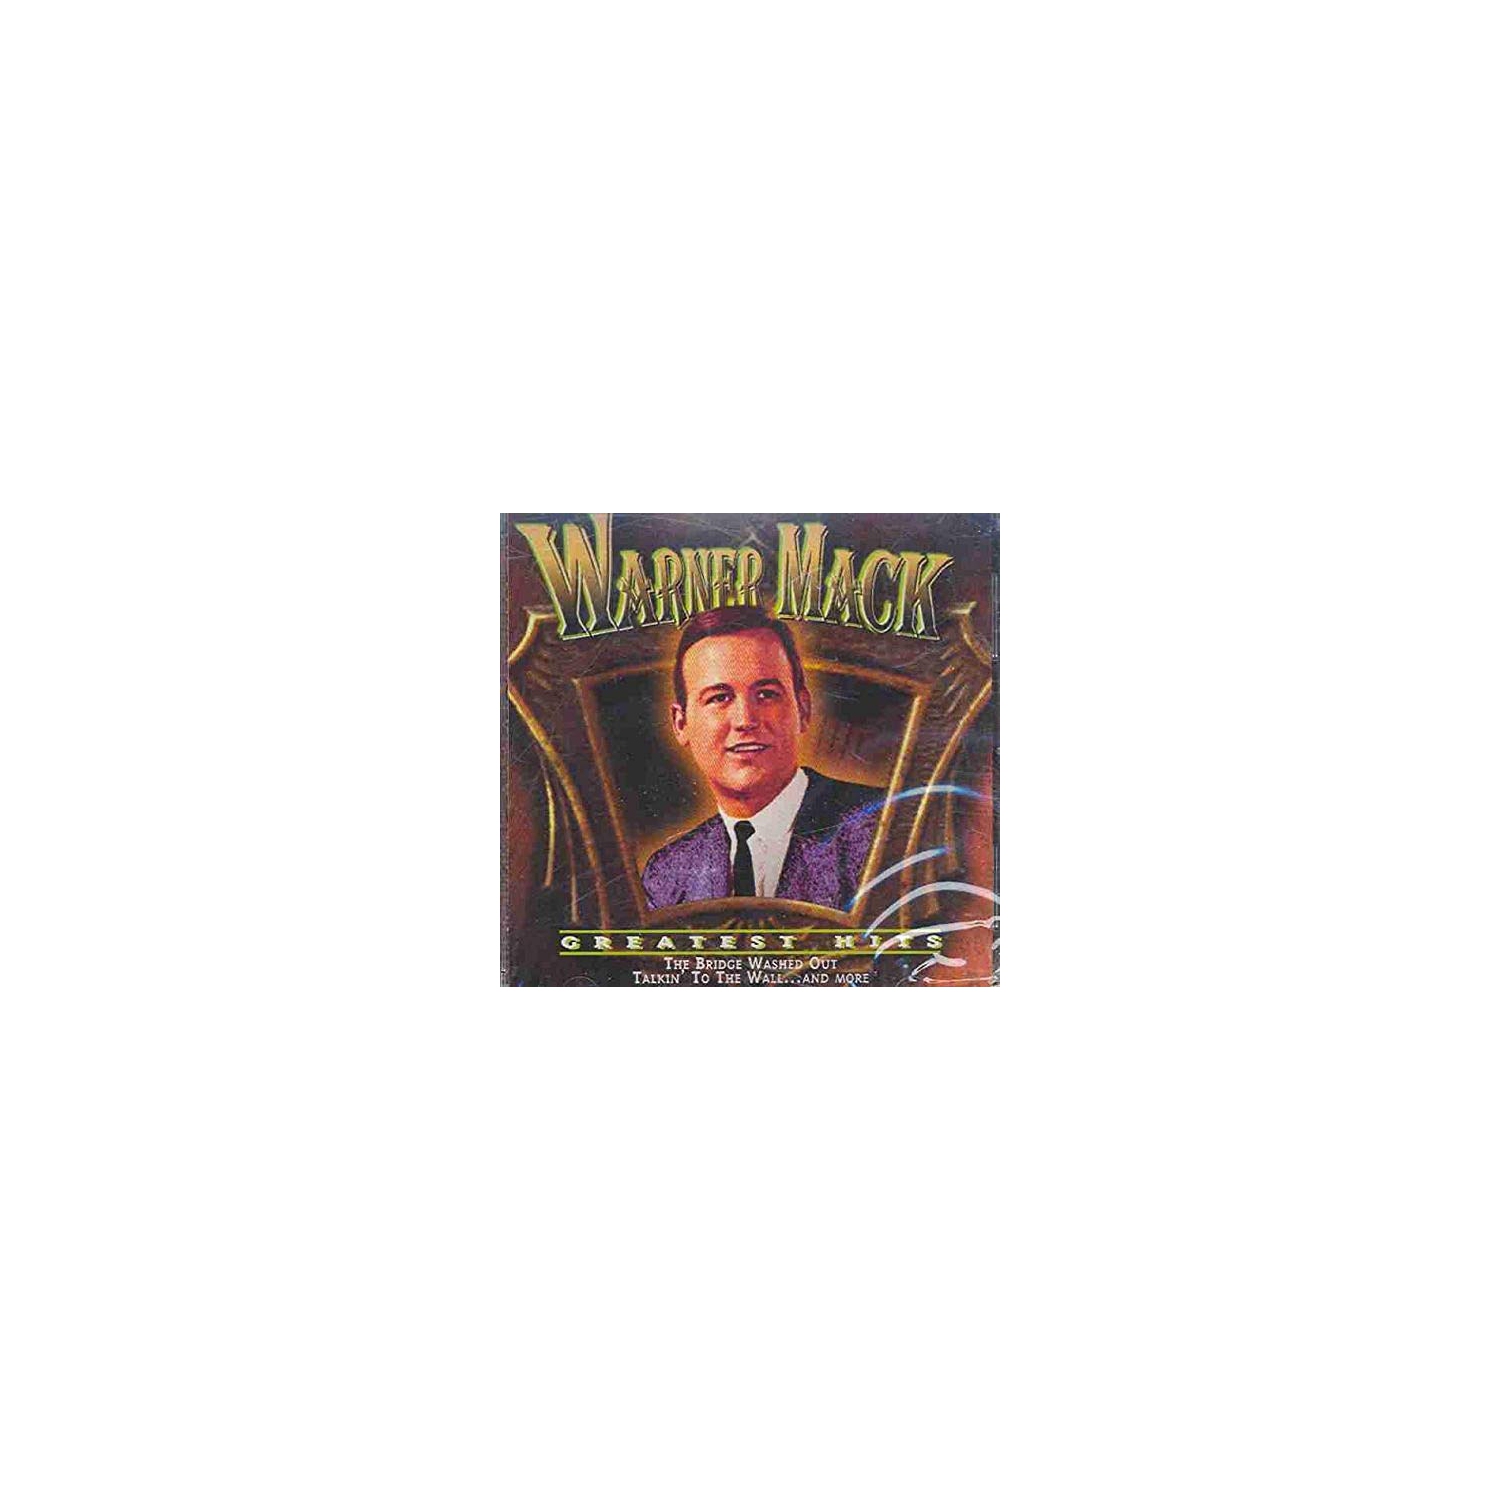 Warner Mack Greatest Hits [Audio CD] Warner Mack